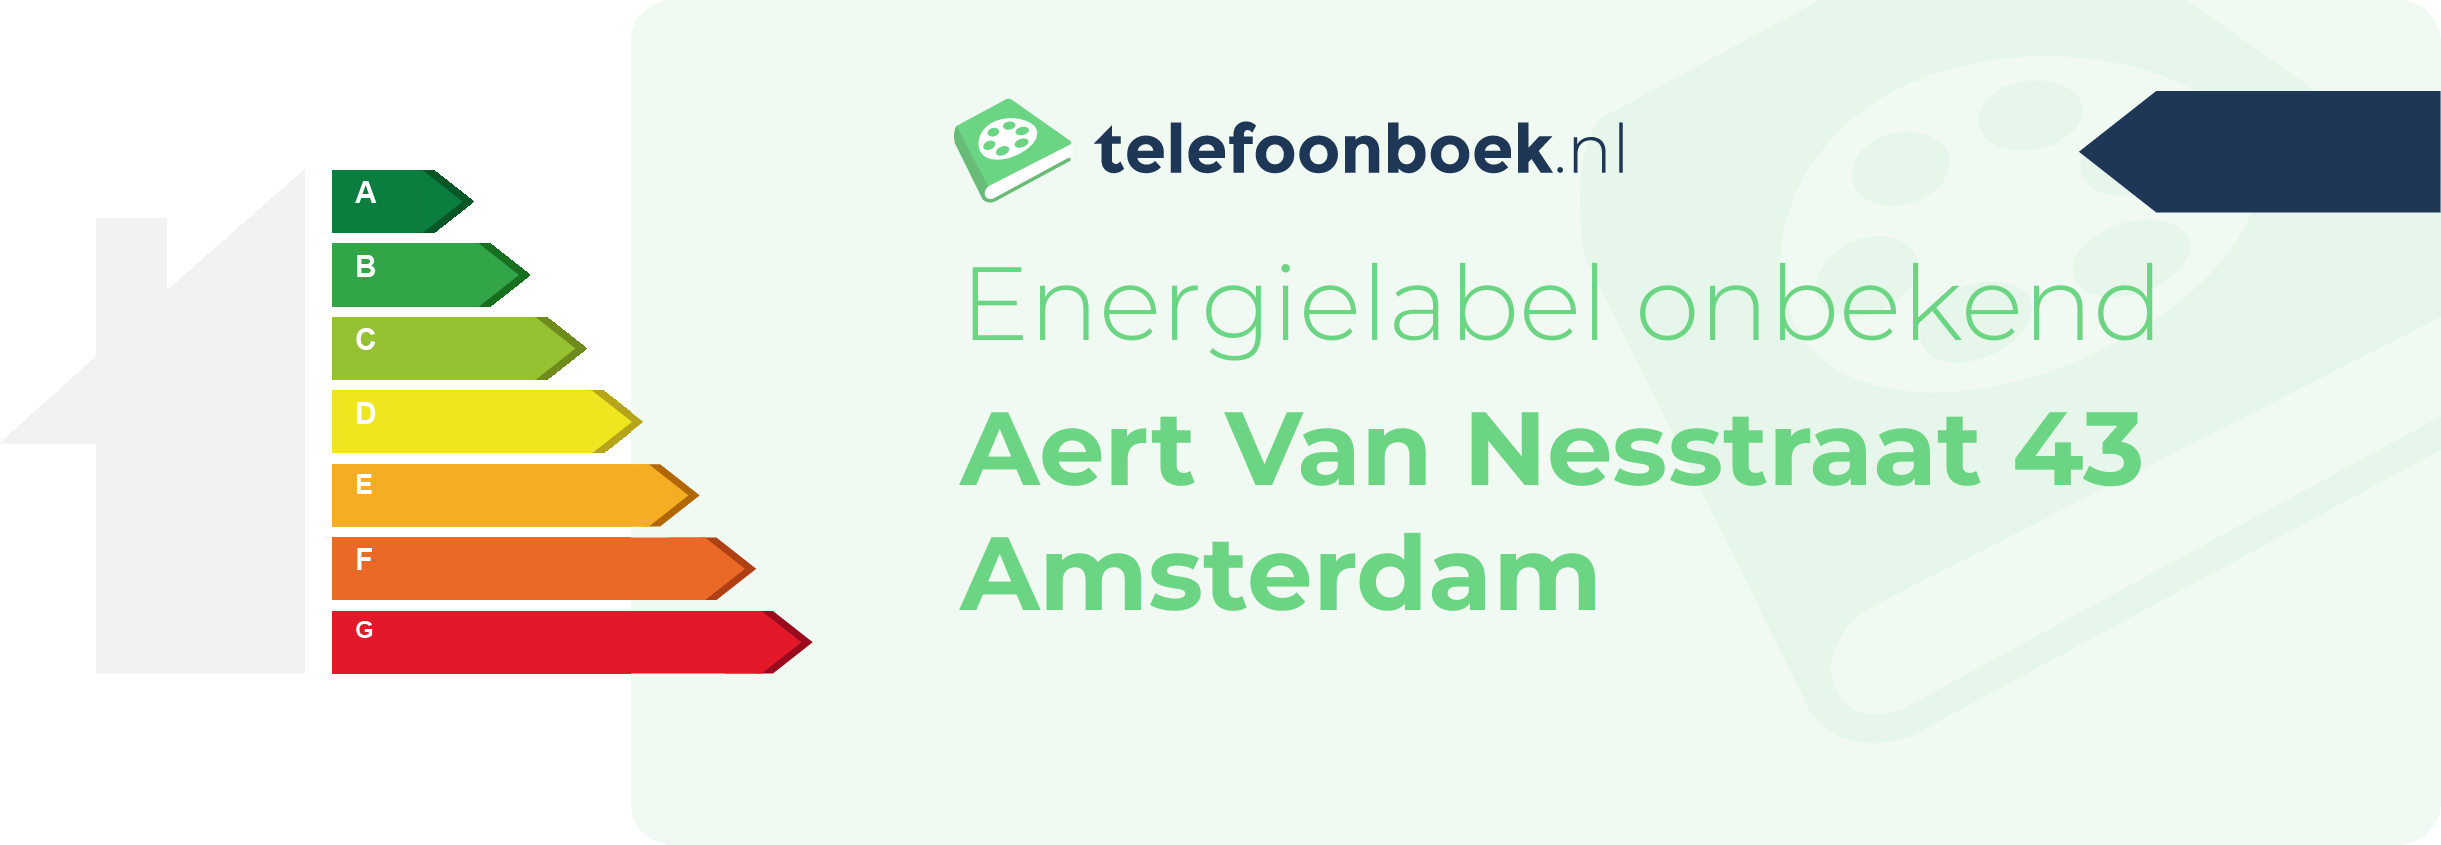 Energielabel Aert Van Nesstraat 43 Amsterdam